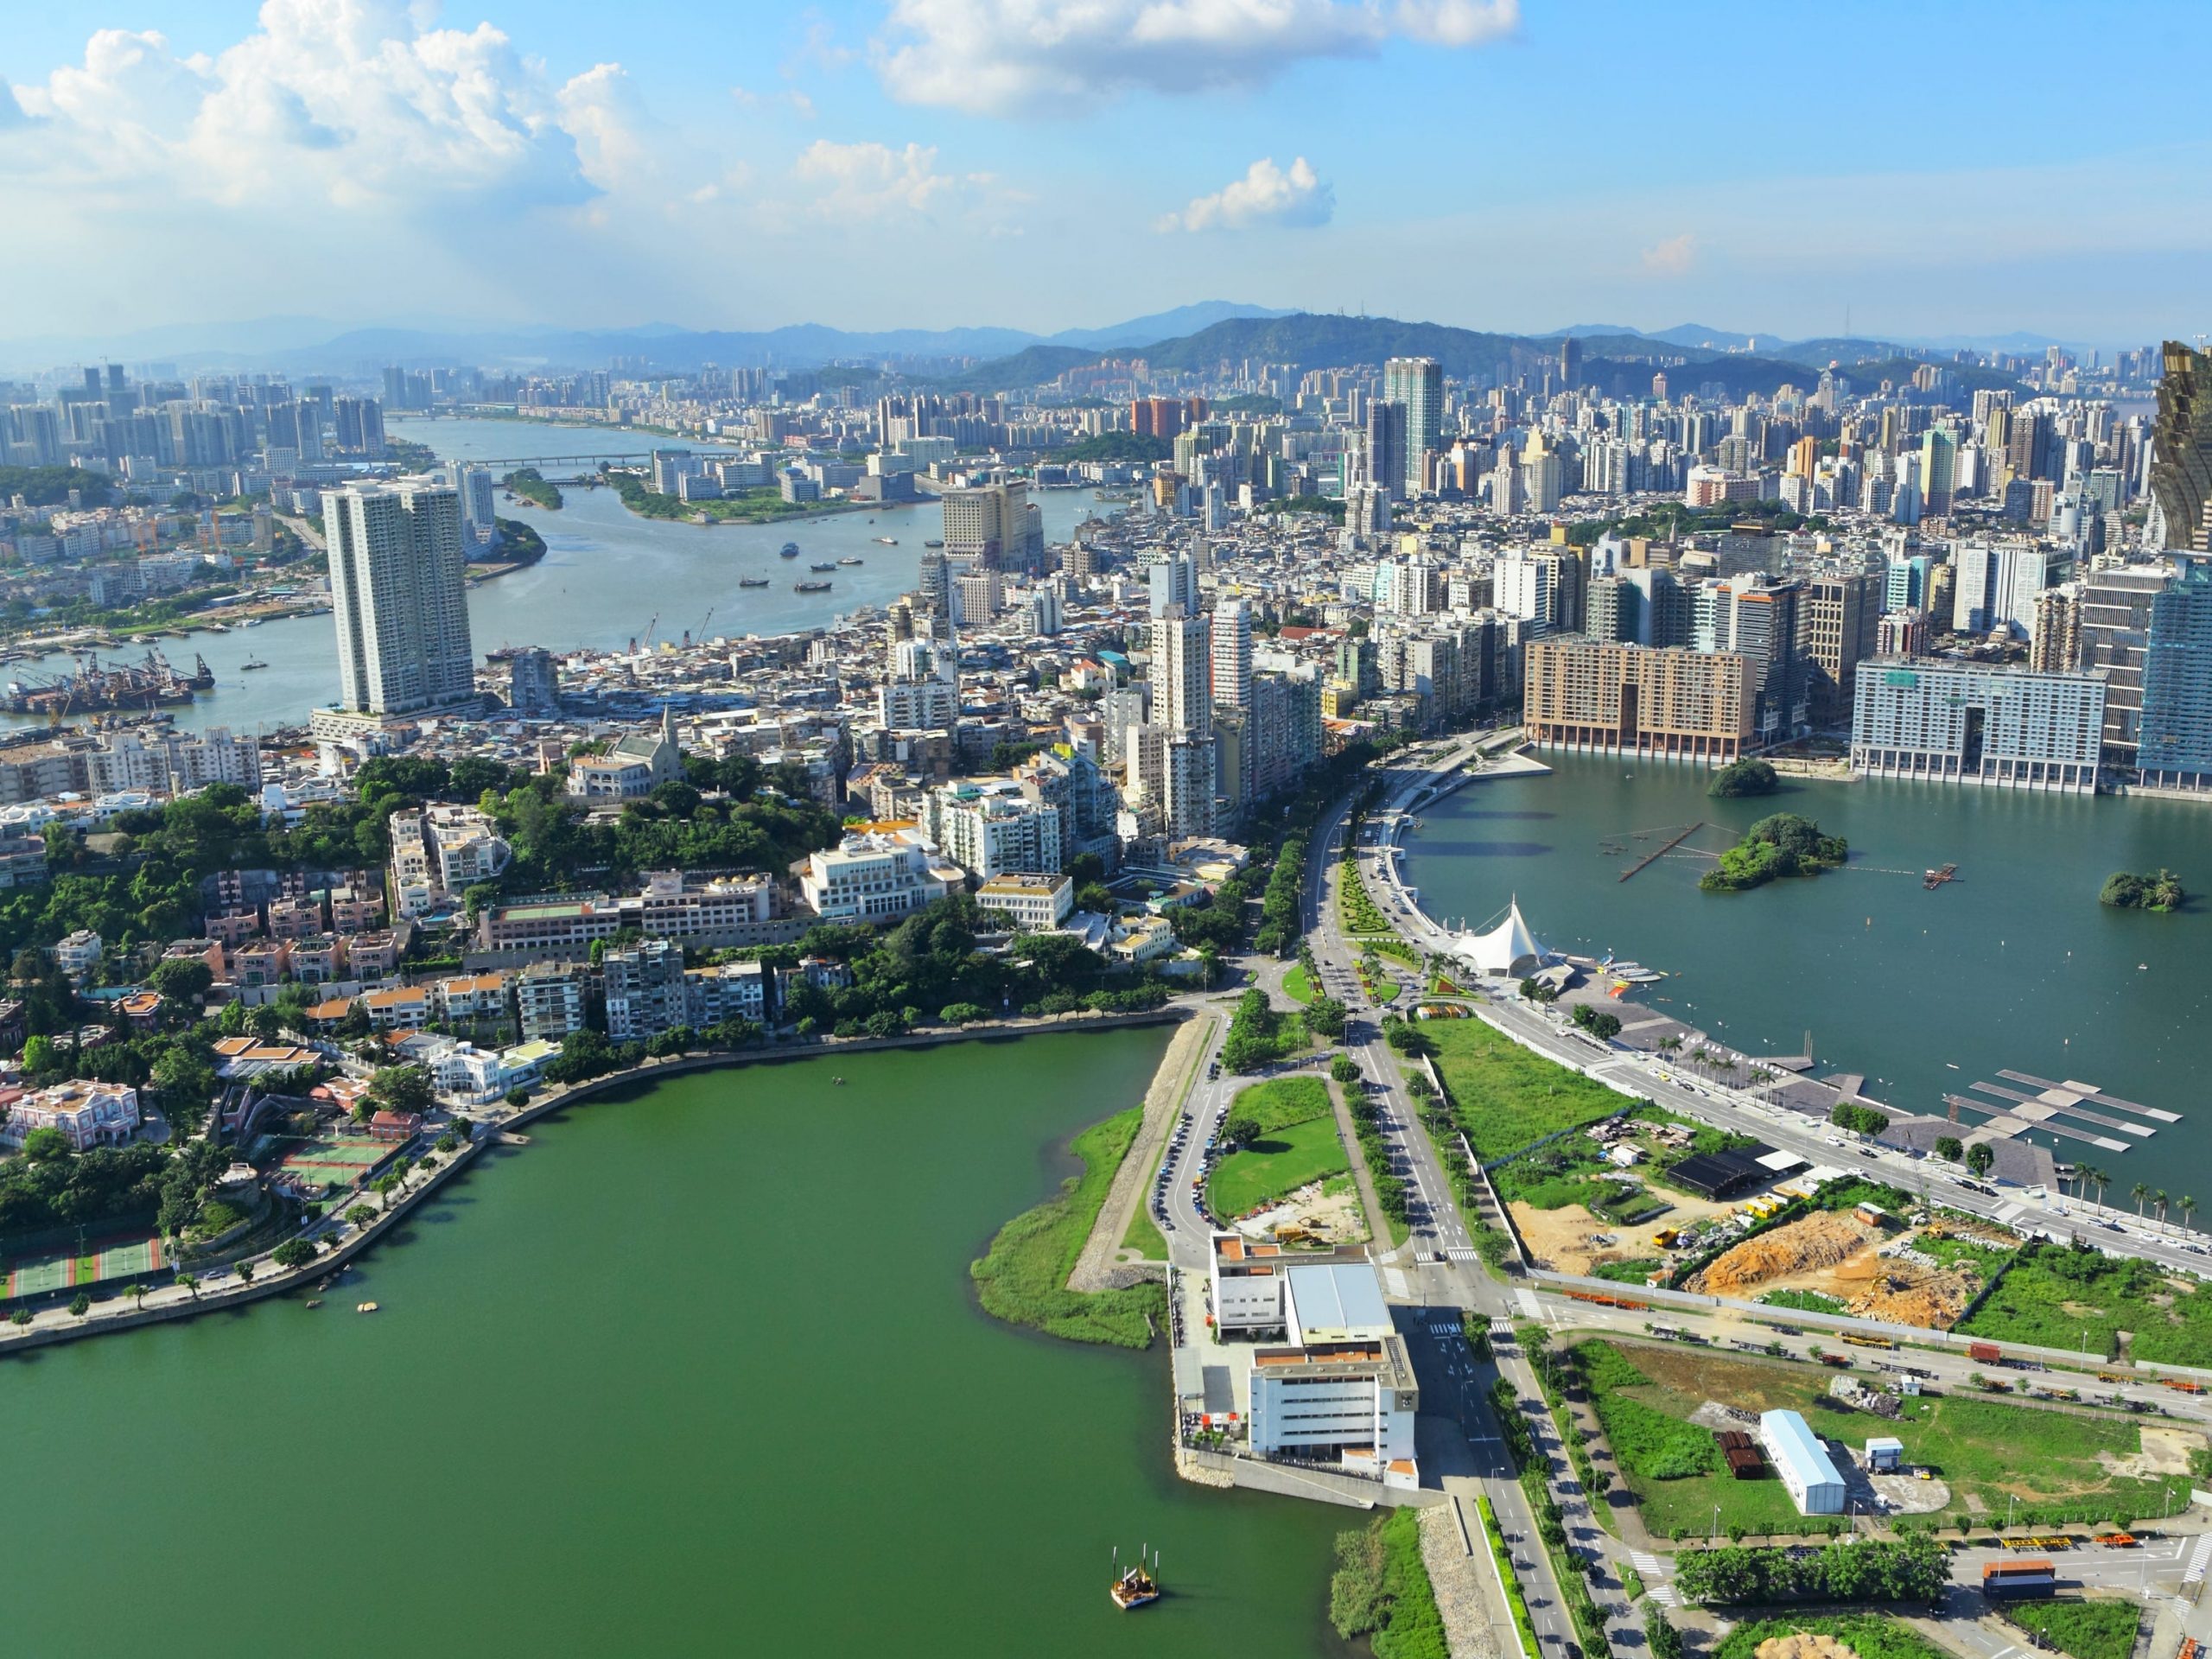 Aerial view of Macau city